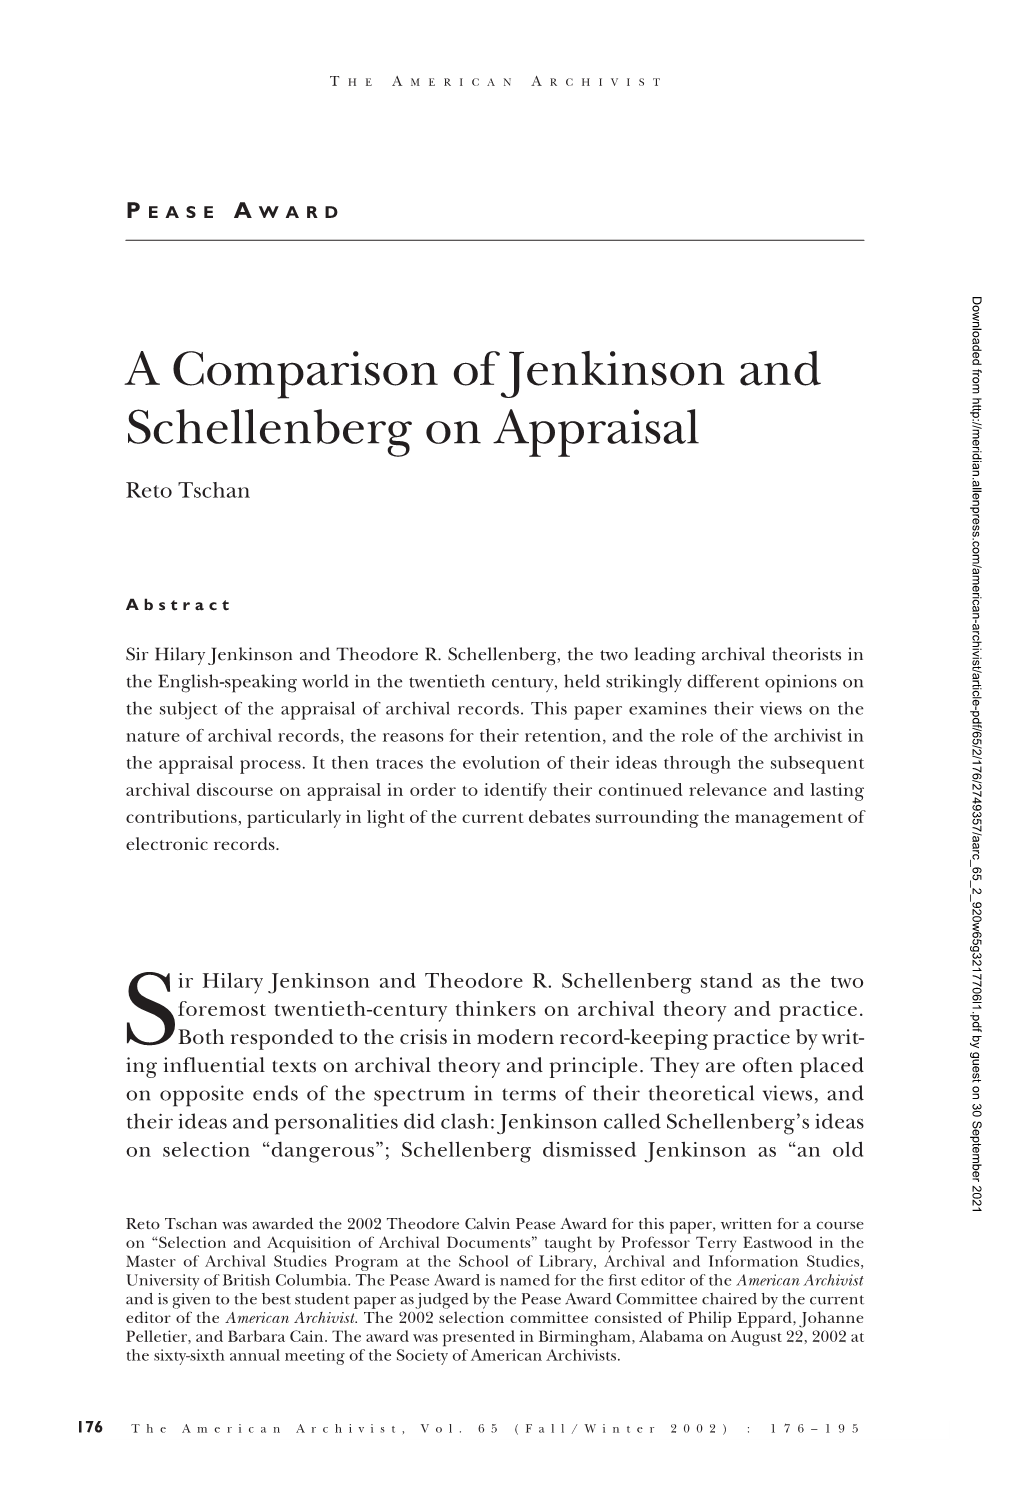 A Comparison of Jenkinson and Schellenberg on Appraisal